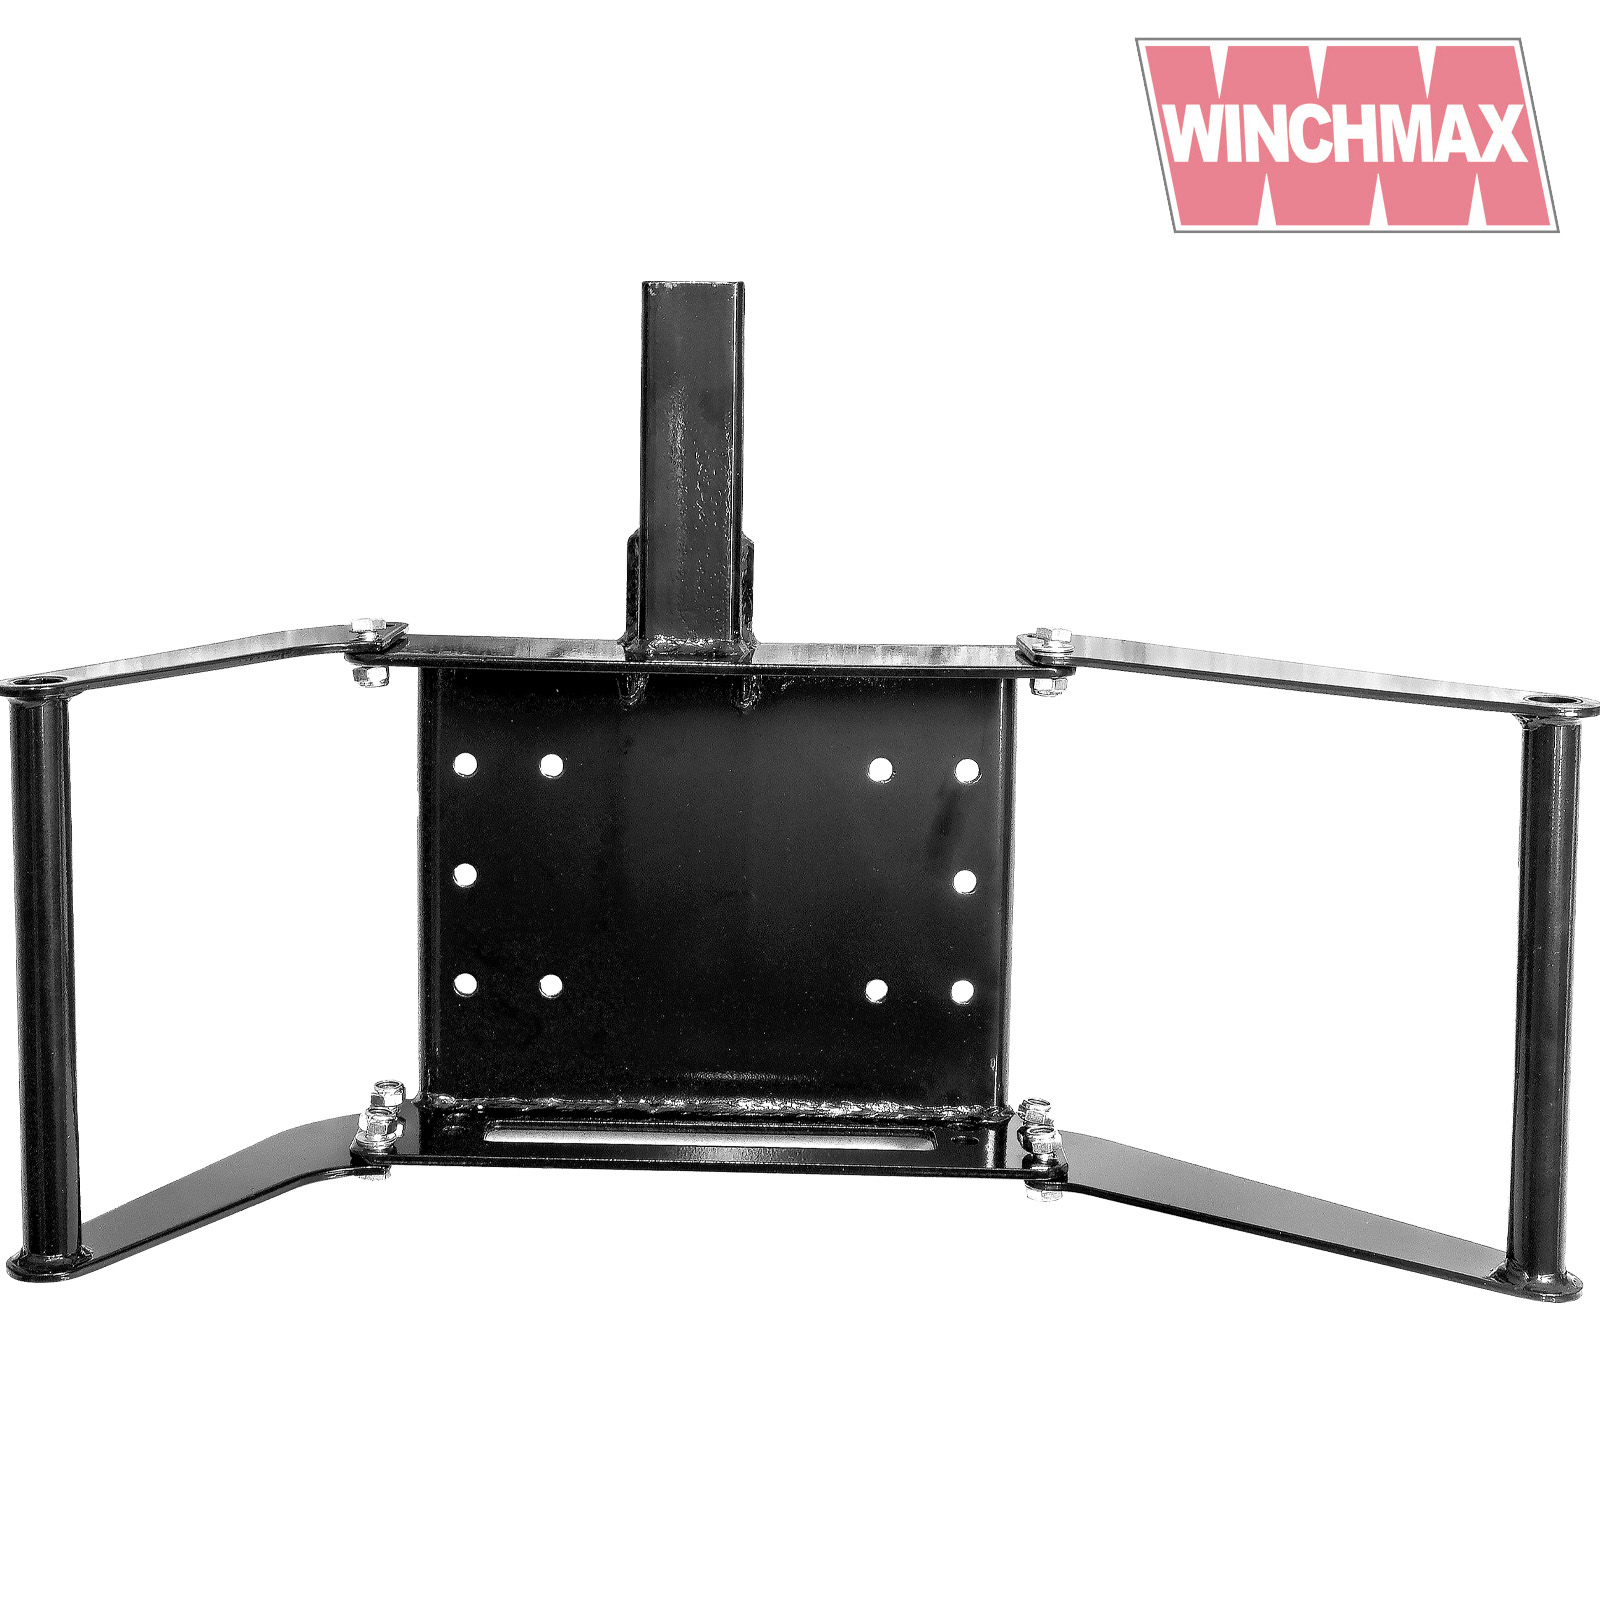 Winchmax WMMP4 Mobile Winch Mount